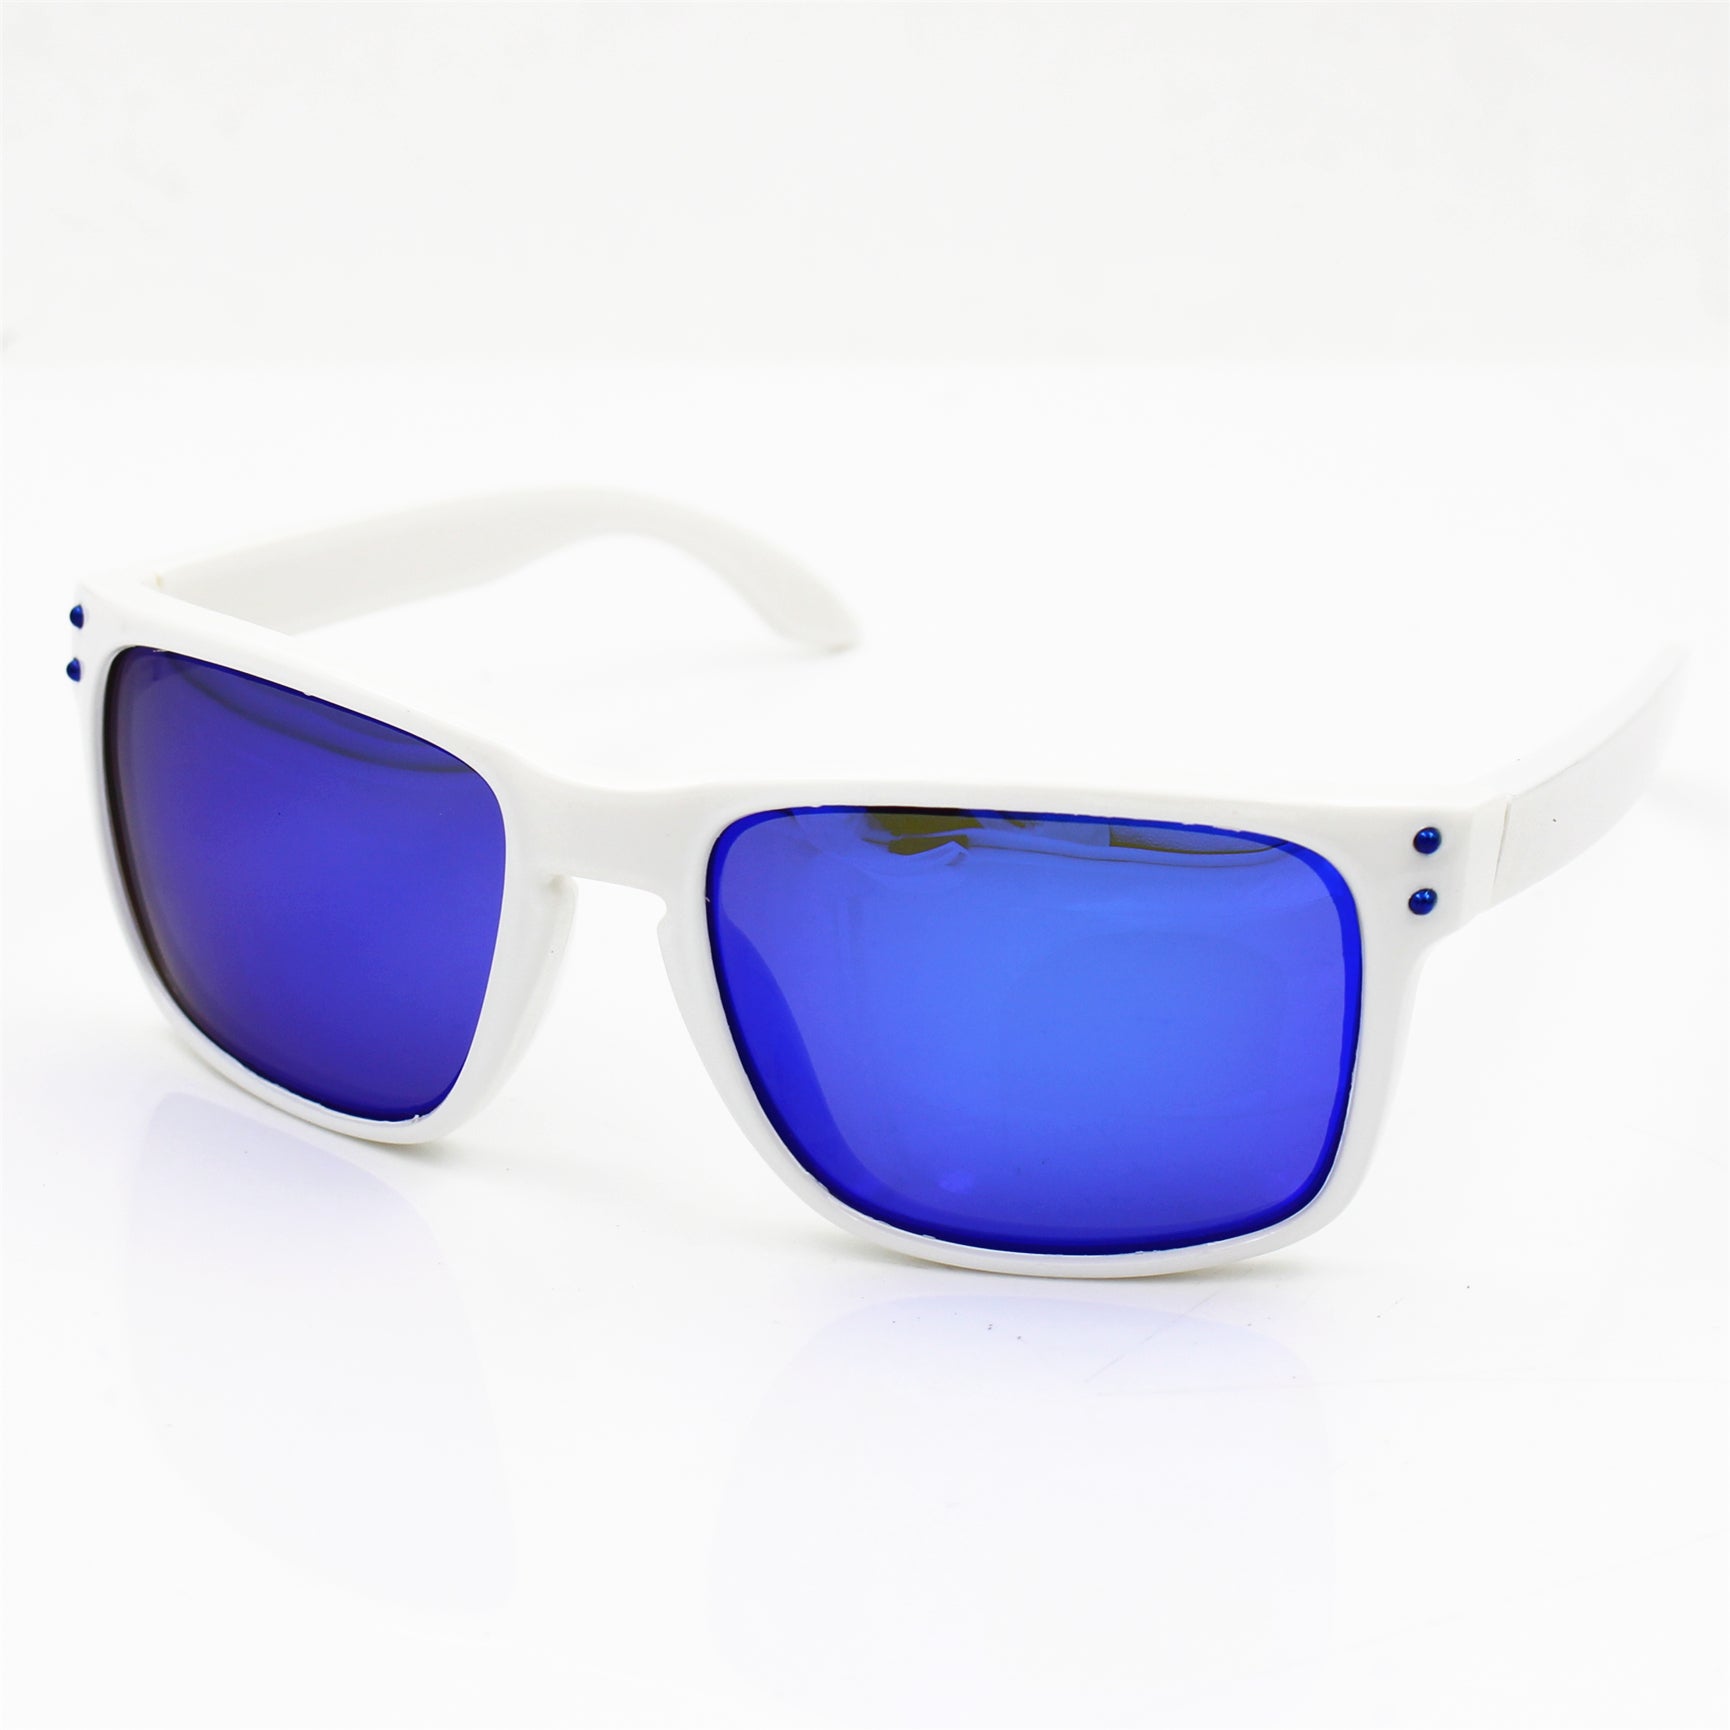 "Men's Sports Polarized Sunglasses: Square Frame for Optimal Performance", lioness-love